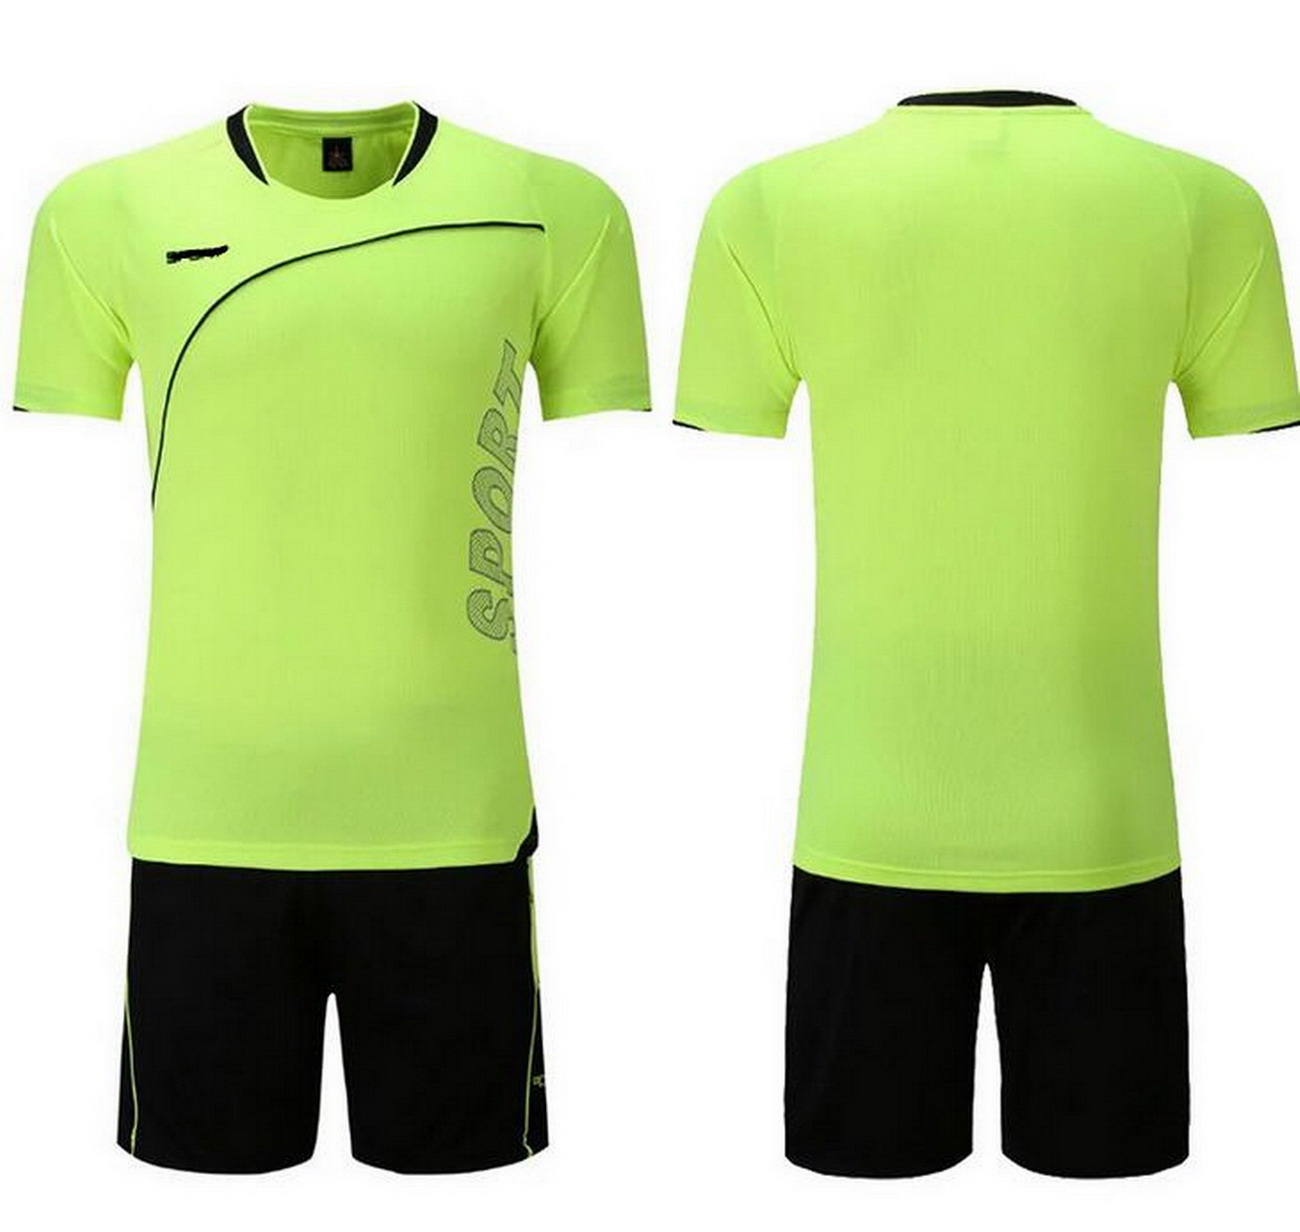 Children's sports clothing customized personalized sportswear quick-dry sportswear8118457